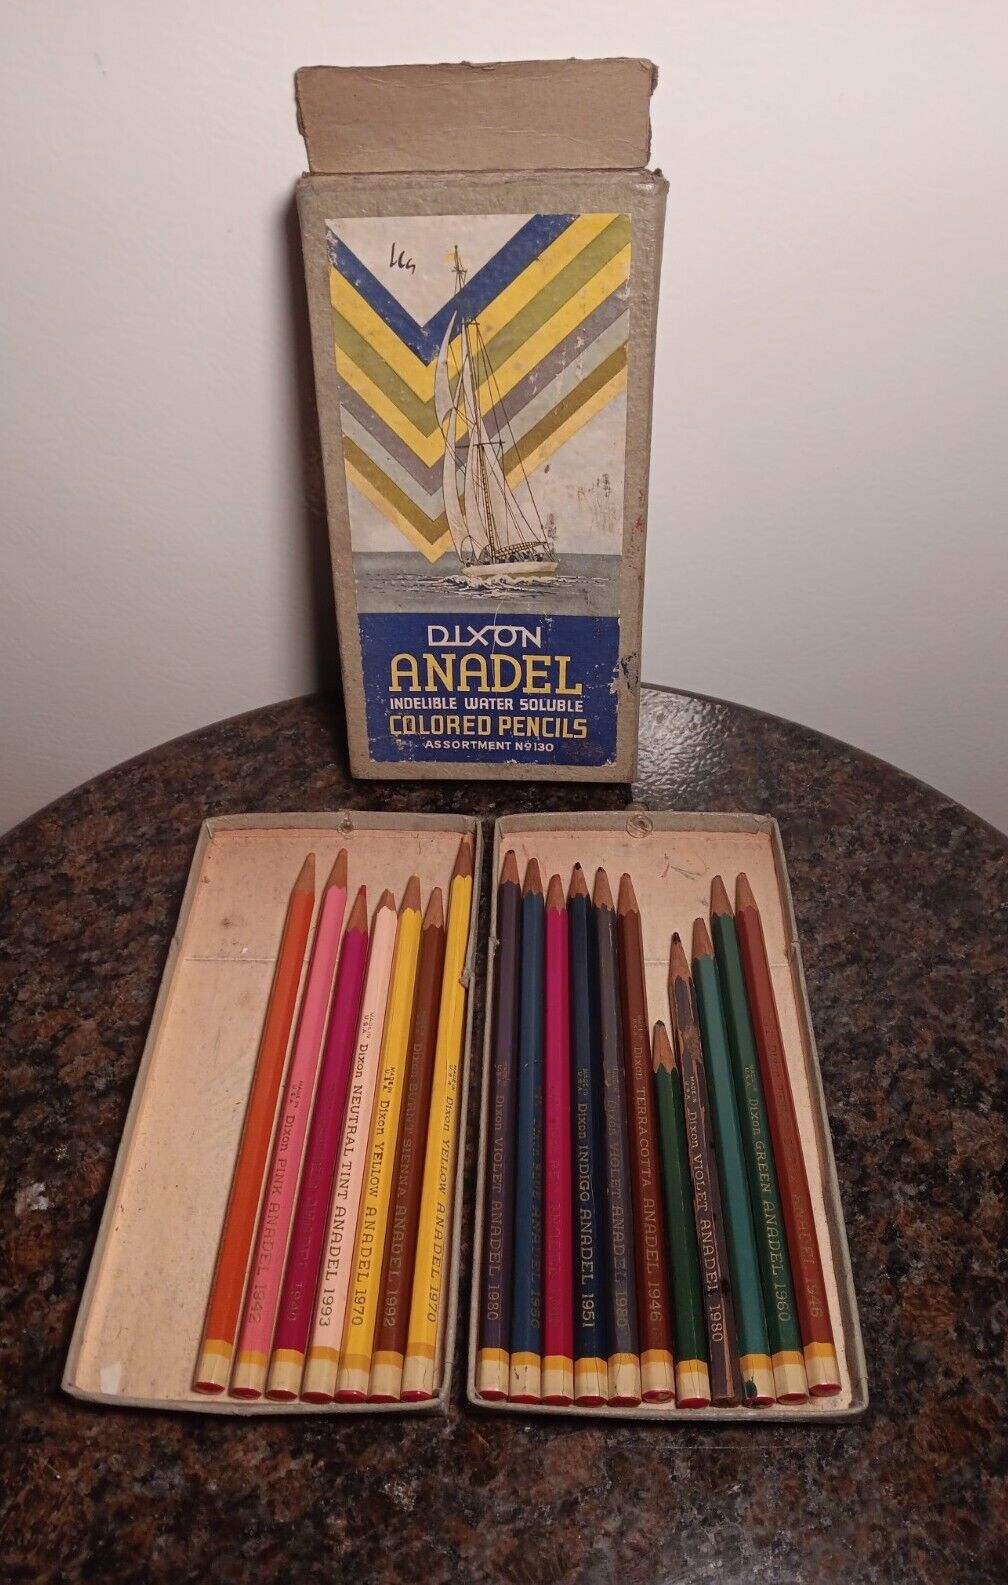 Vintage 1940s Dixon Abadel Colored Pencils Set No. 130 w/Box (18 Pencils)